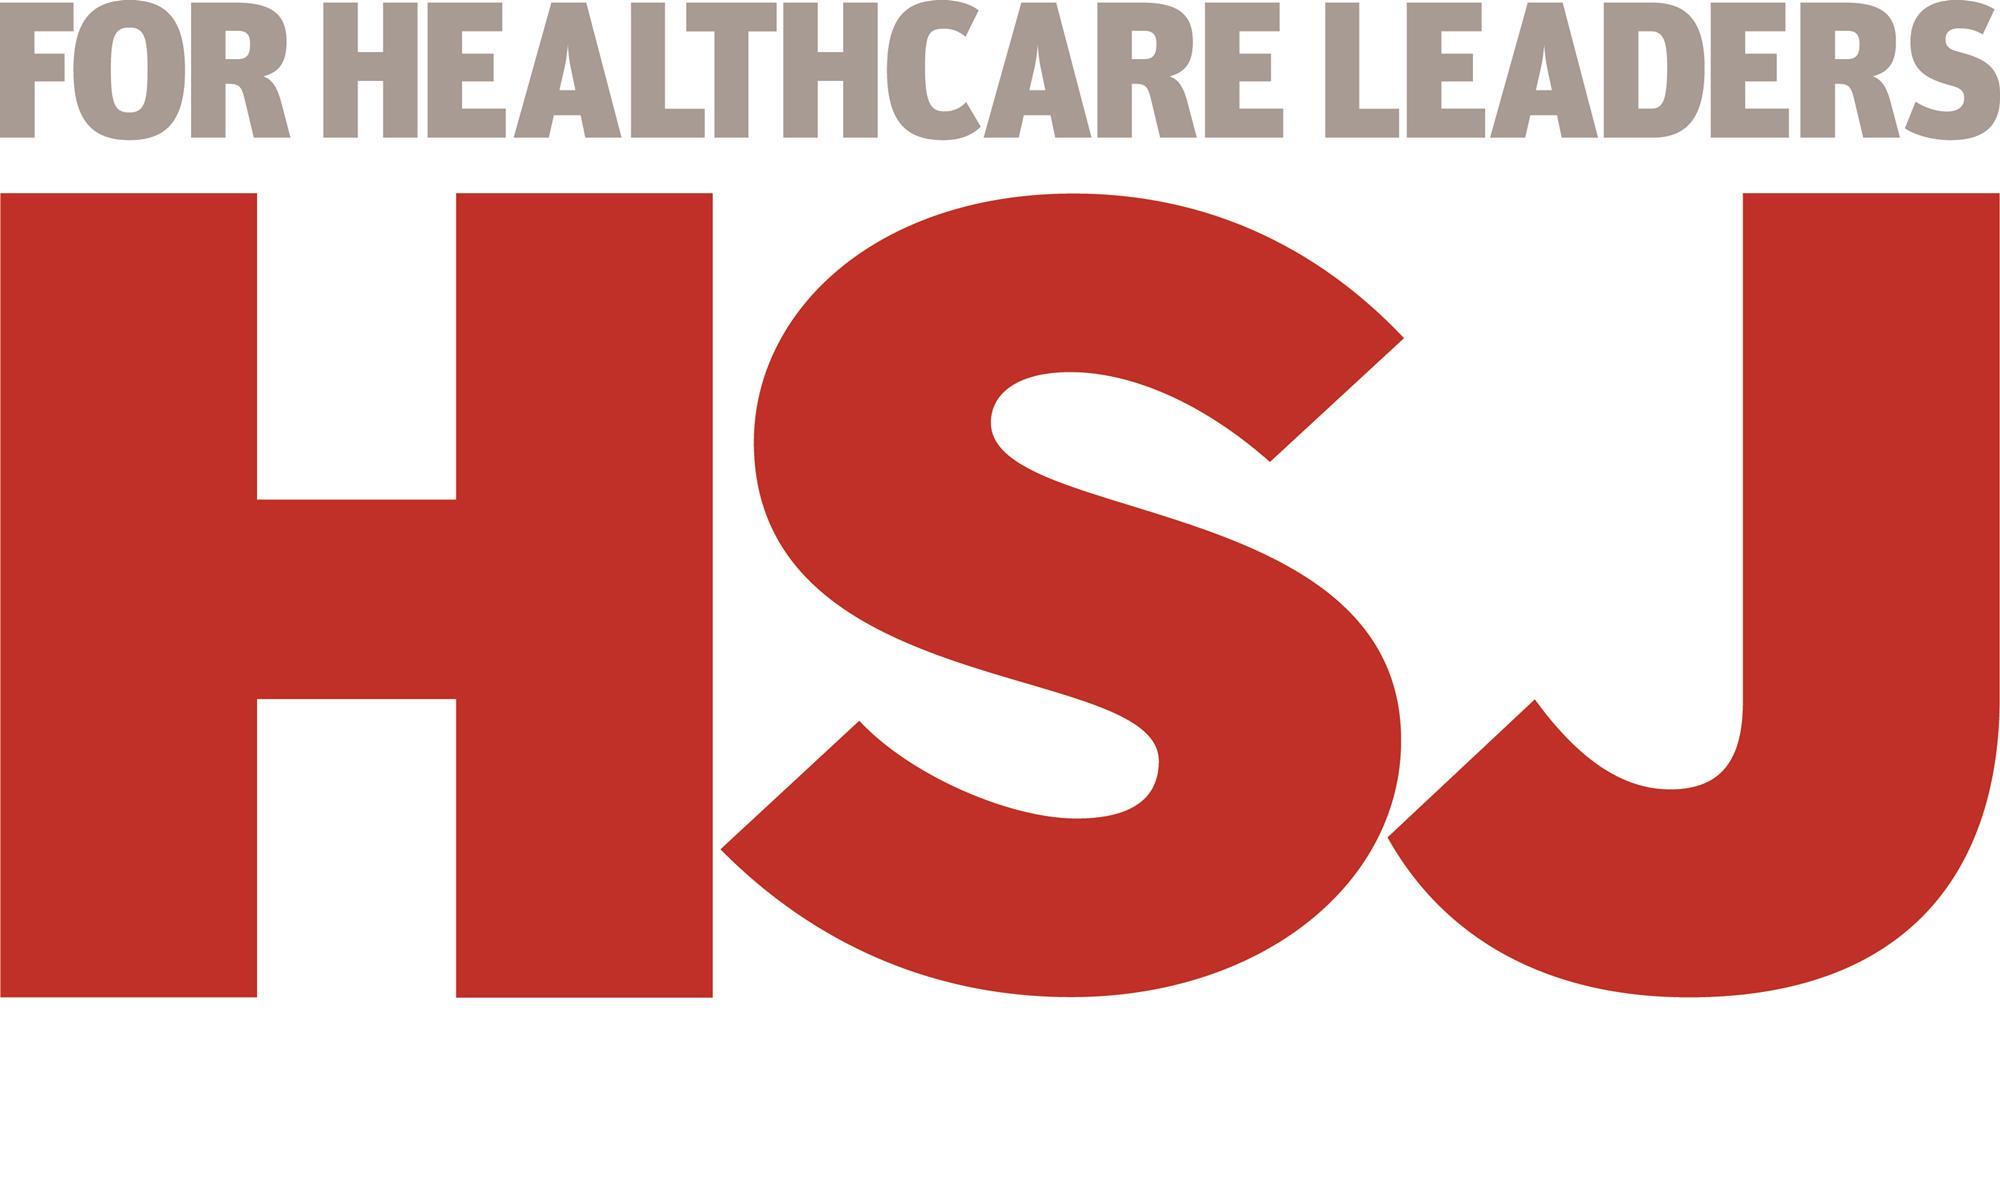 HSJ Logo